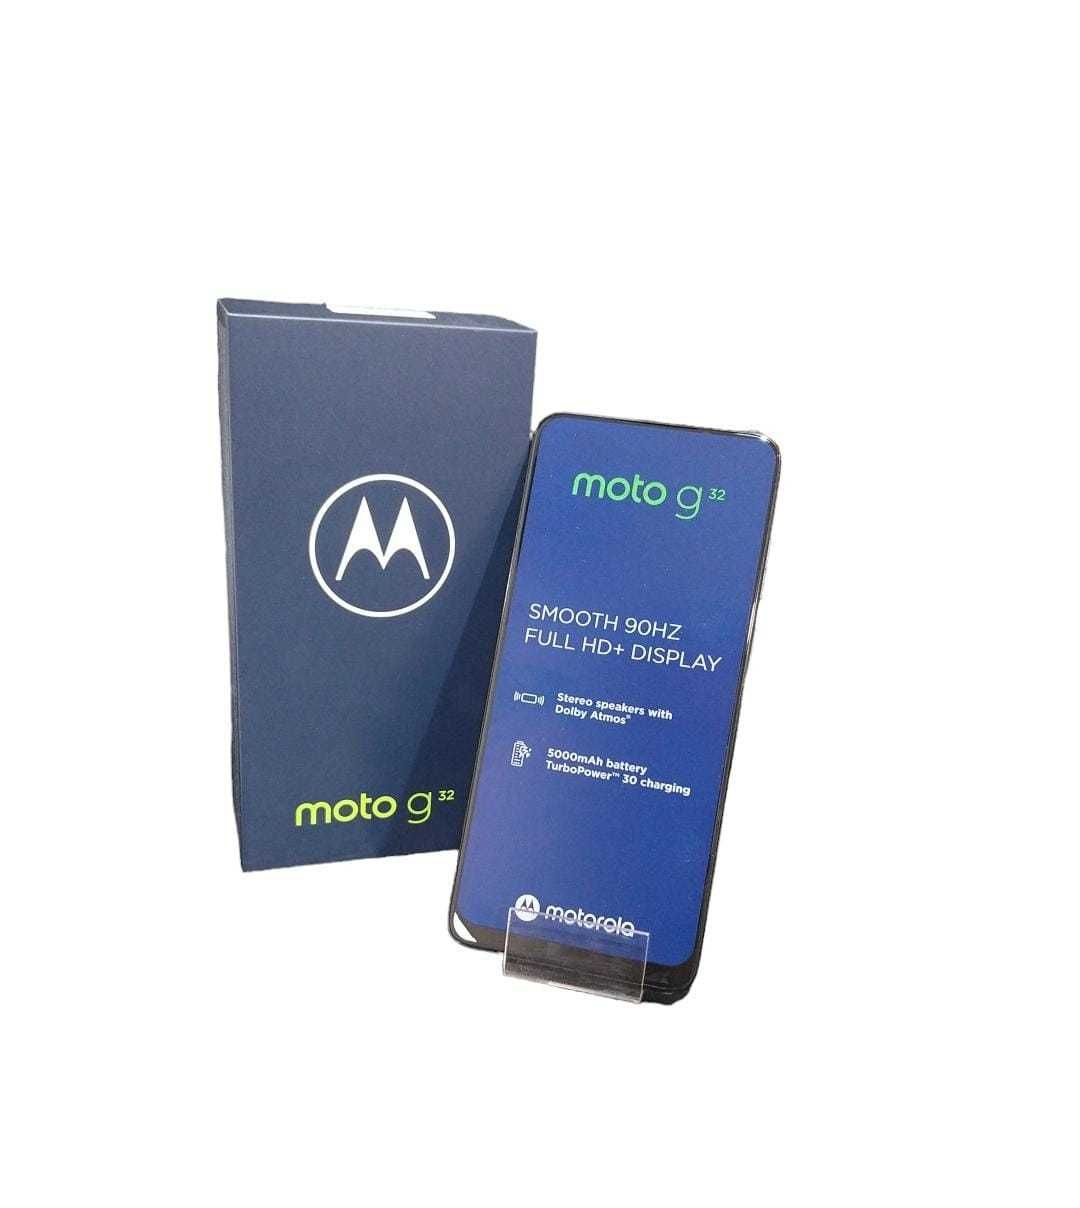 Telefon Motorola G32 Cod - 20433 / Amanet Cashbook Braila